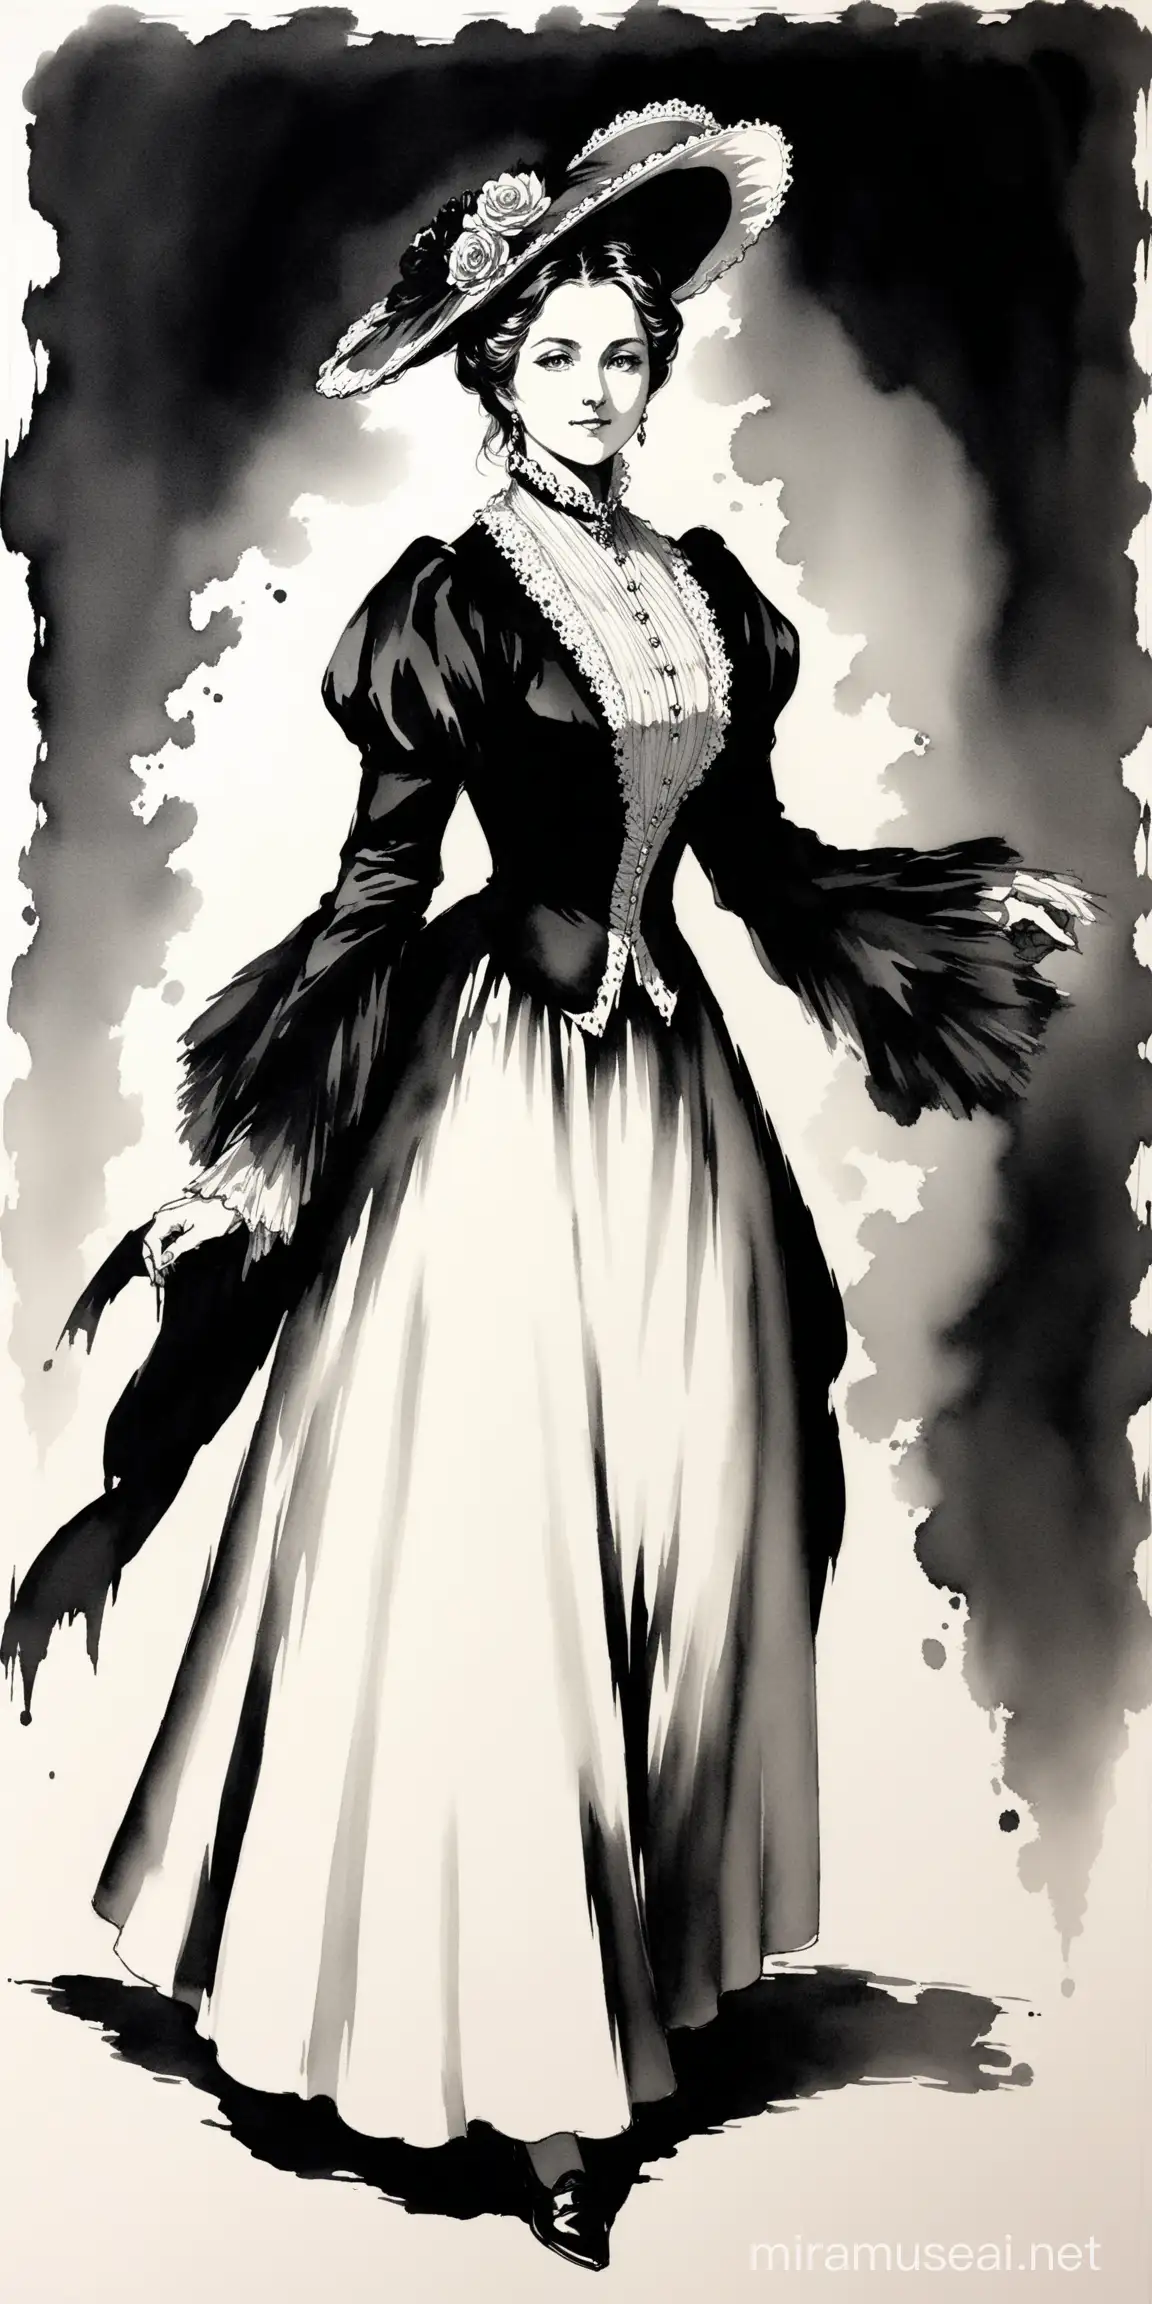 Victorian Noblewoman Portrait in Ink Elegant Monochrome Depiction